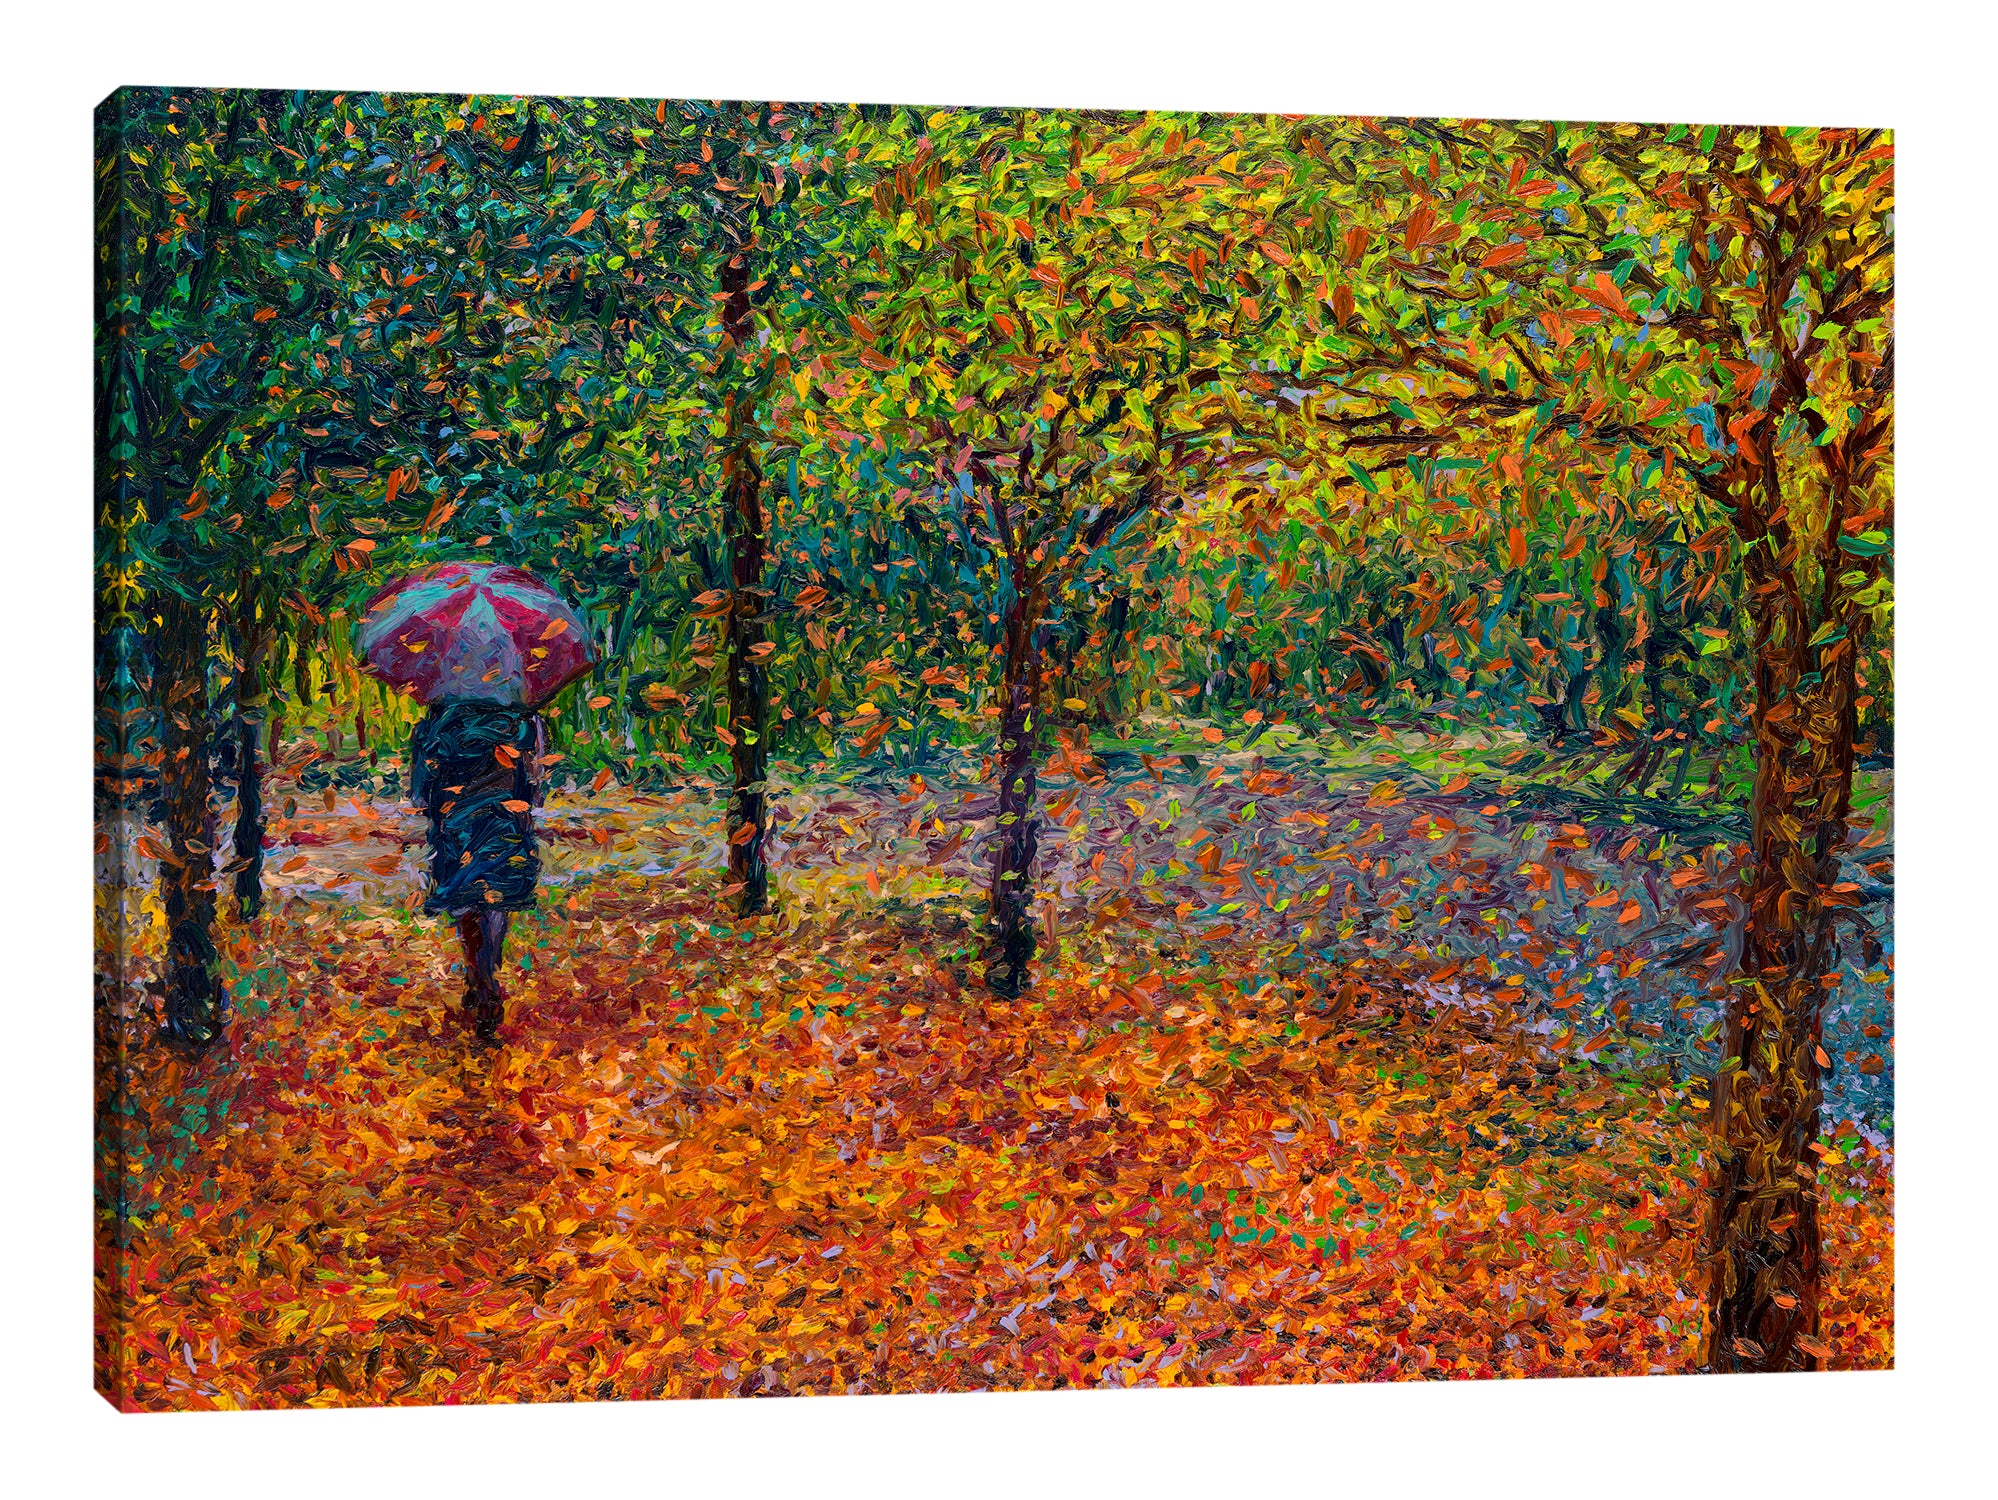 Iris-Scott,Modern & Contemporary,People,jacket,umbrella,trees,forests,fall,autumn,